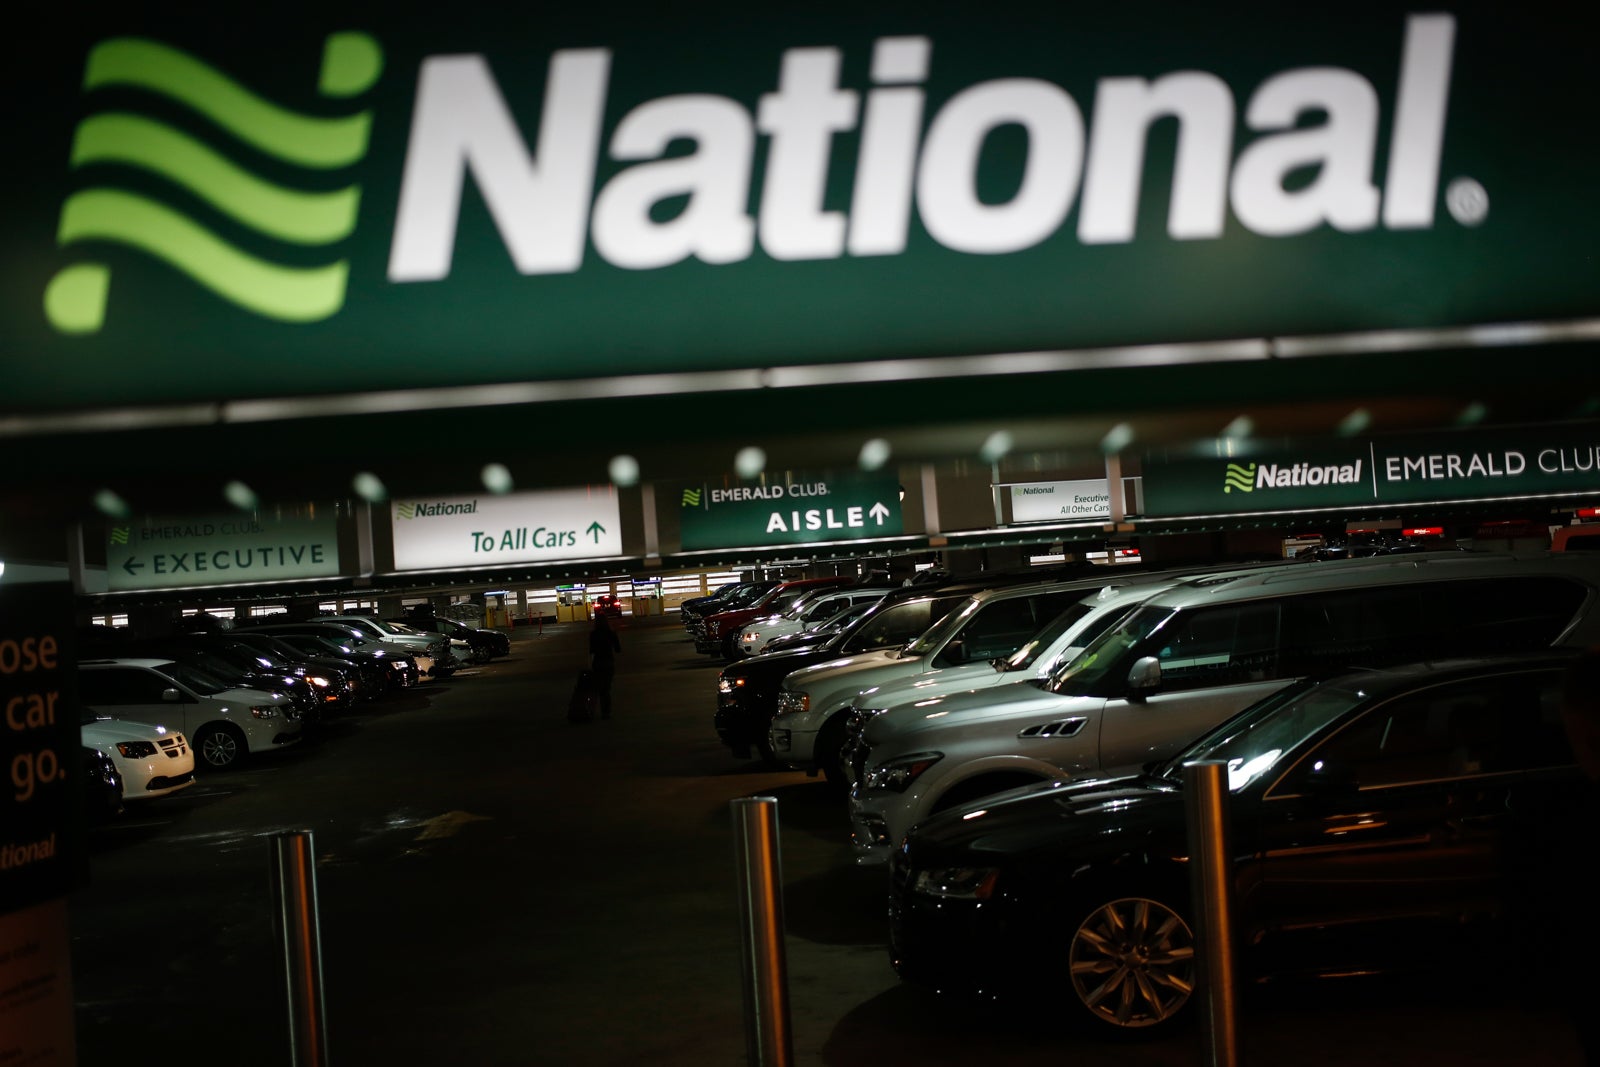 National Car Rental Extends Loyalty Benefits Through 2021